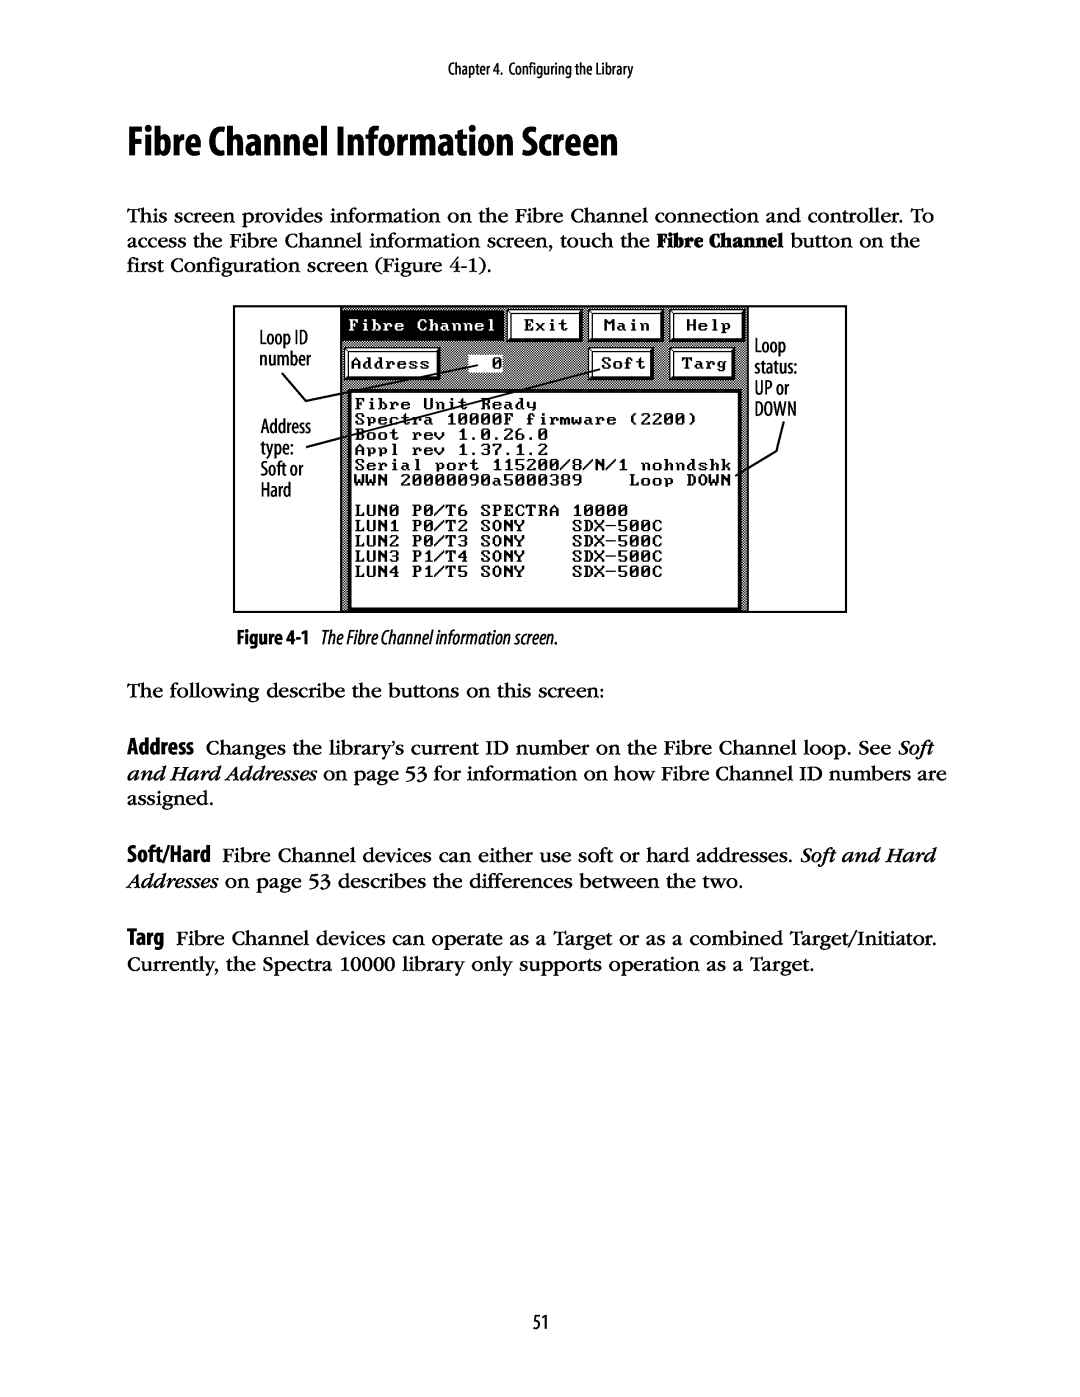 Spectra Logic 10000 manual Fibre Channel Information Screen, 1 The Fibre Channel information screen 